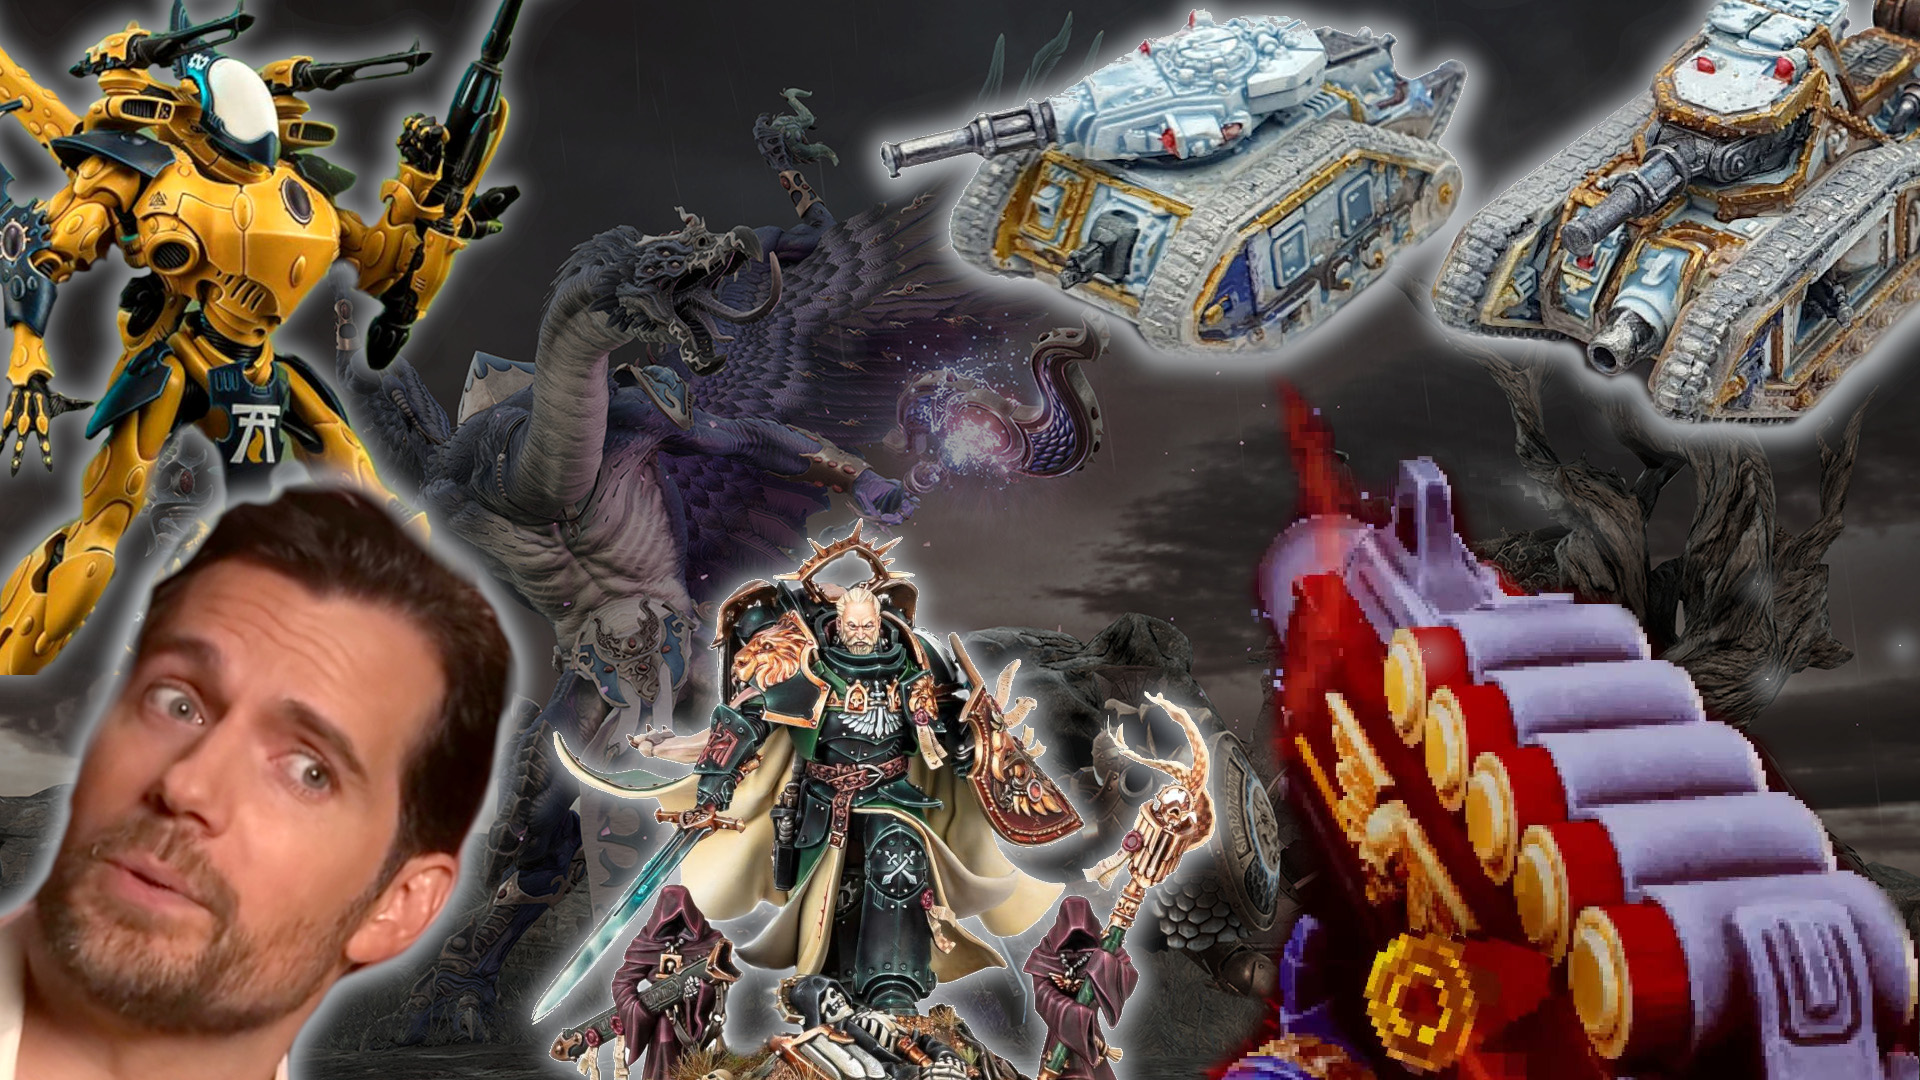 Warhammer 40,000: Darktide - a stunning technical accomplishment that  pushes PC hard